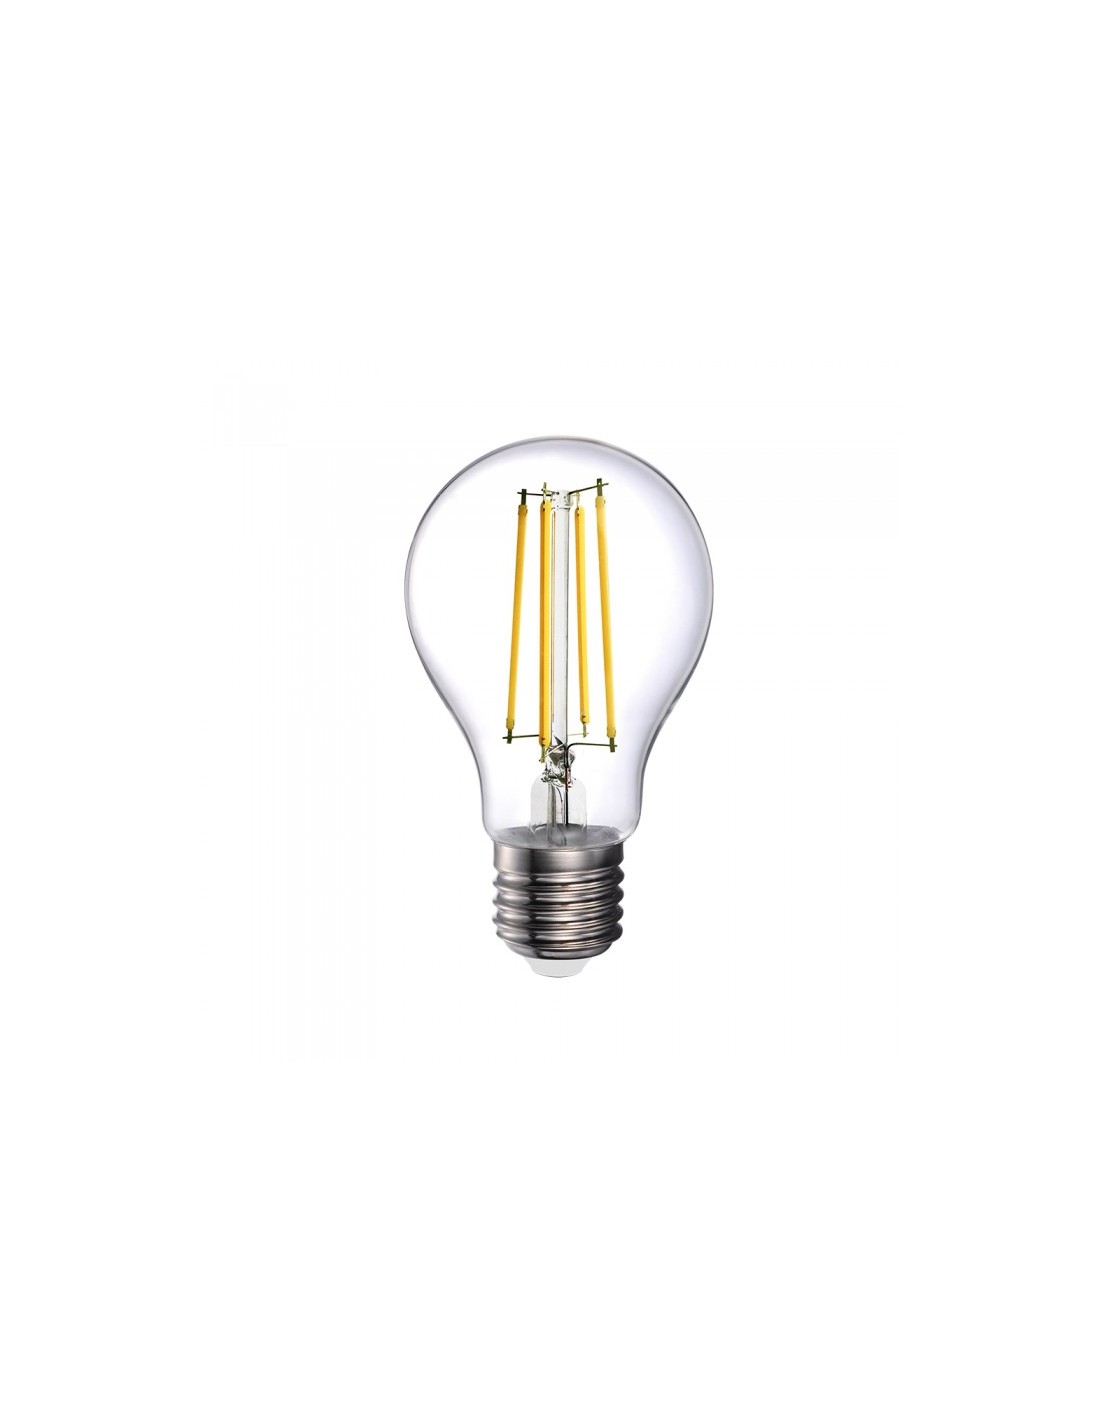 Lampada Pull Light lampadina LED a batteria da appendere